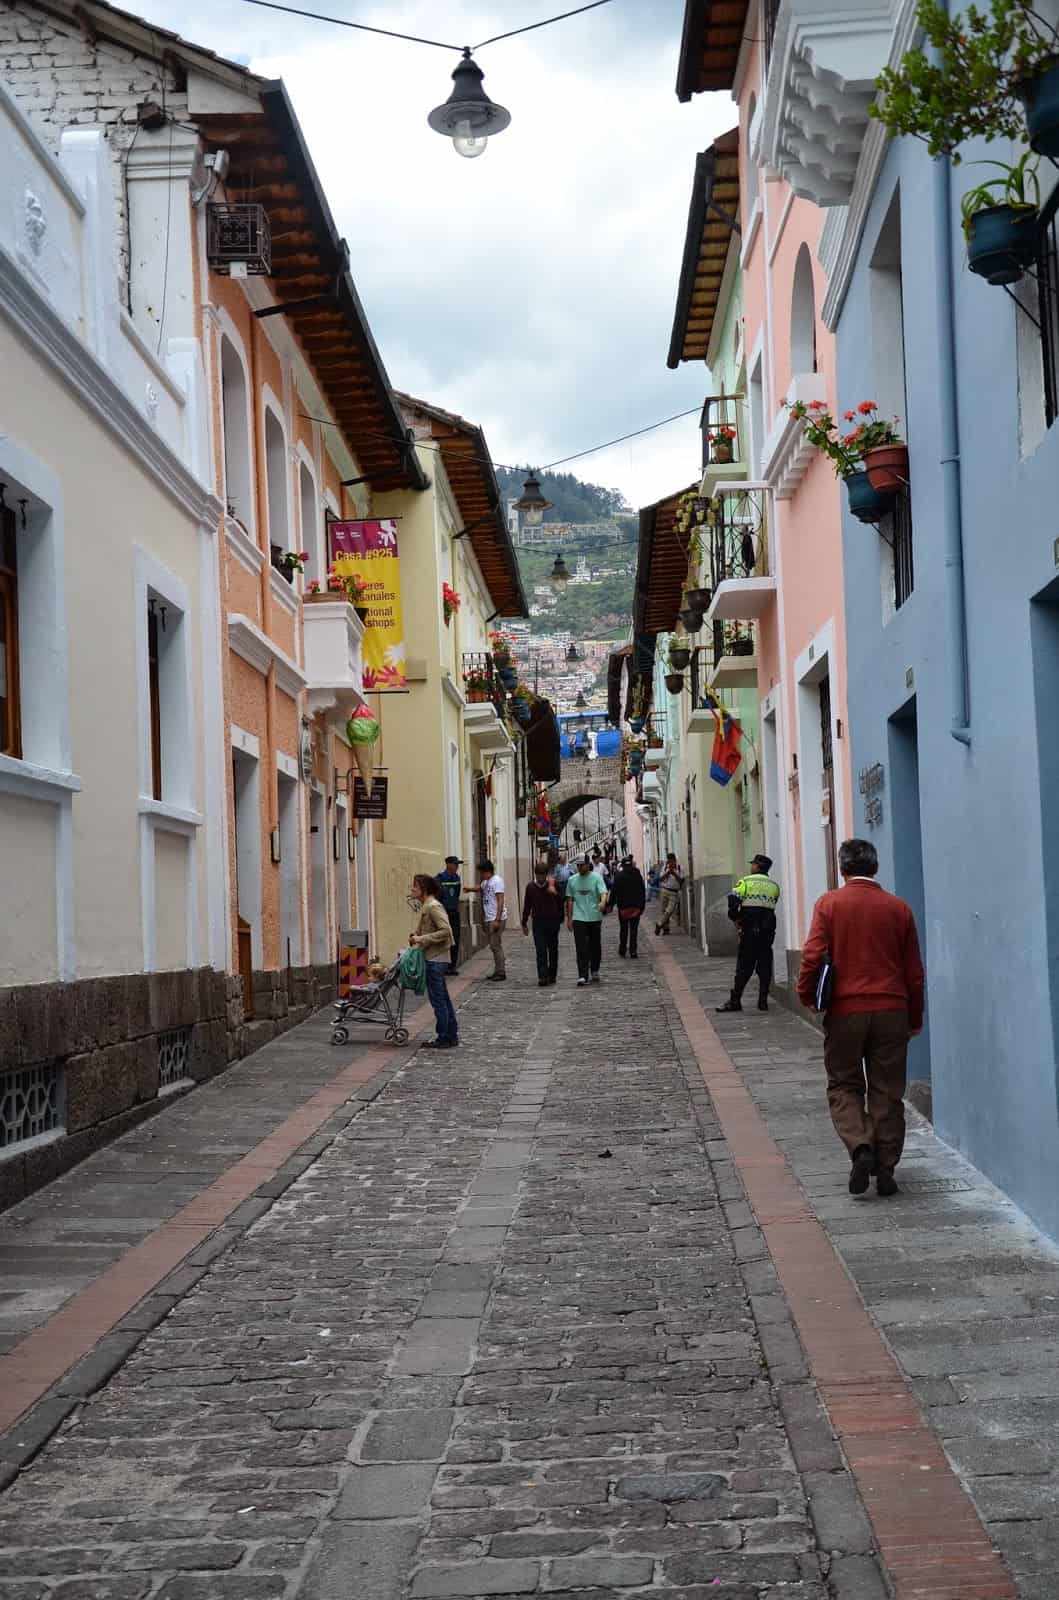 La Ronda in Quito, Ecuador